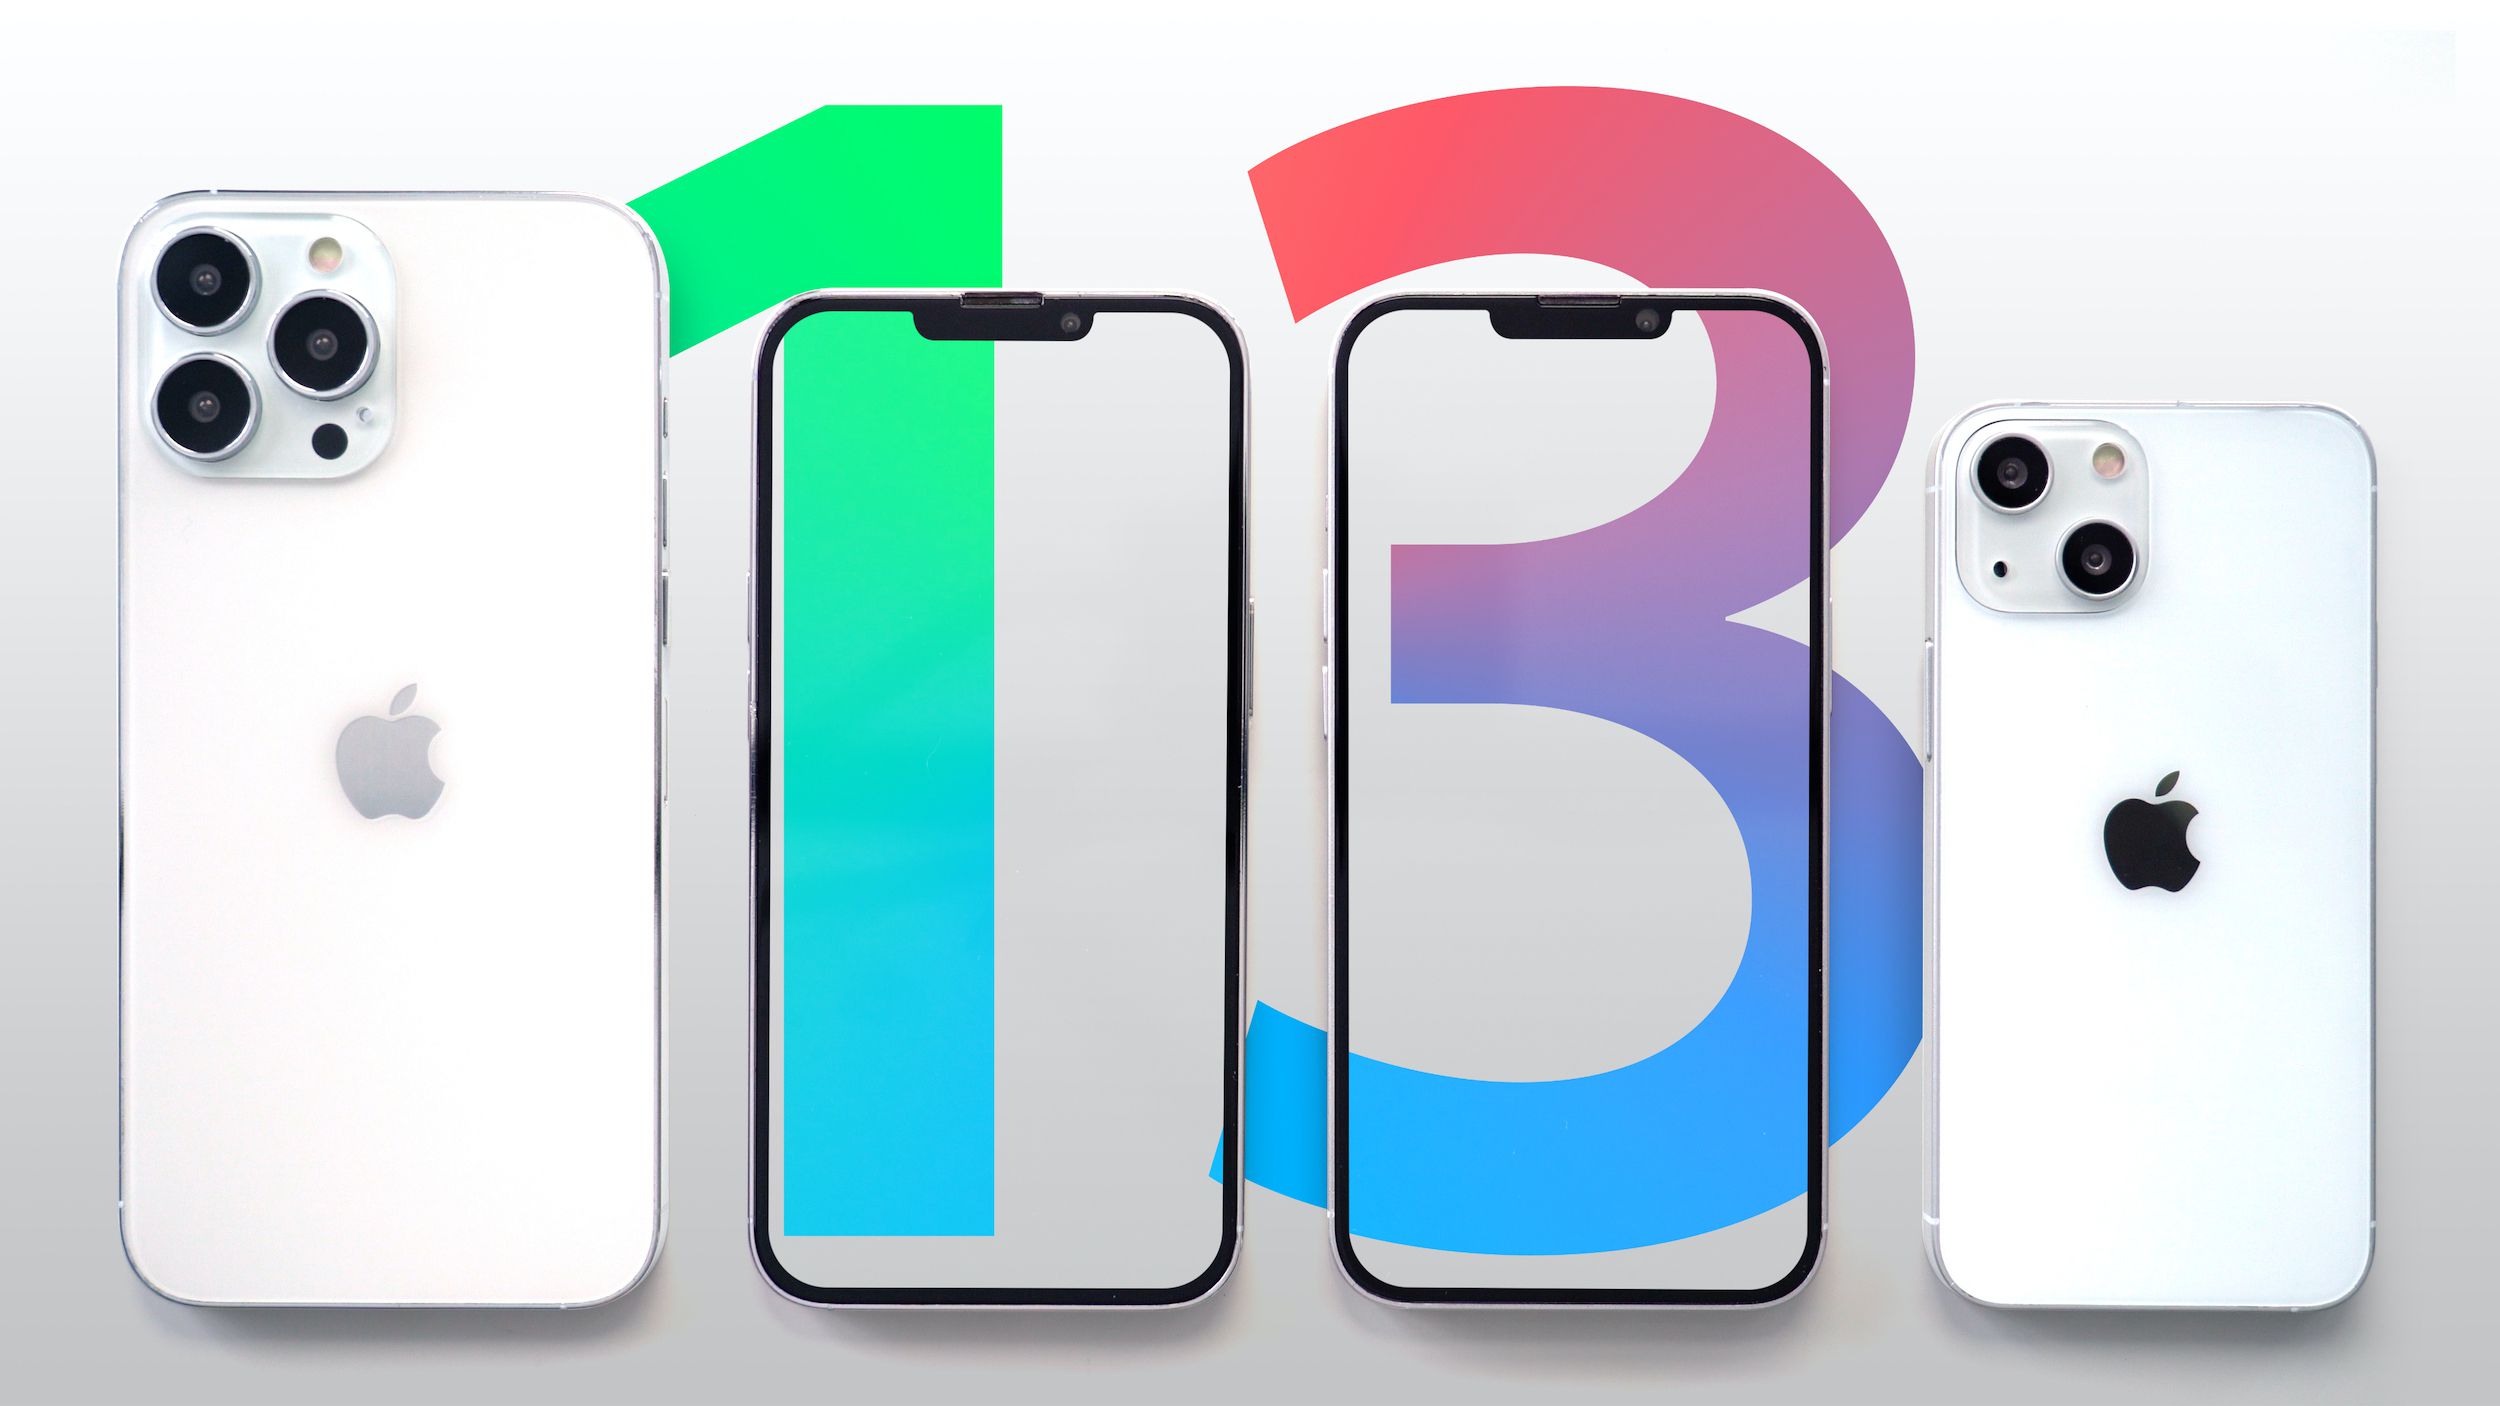 Apple iPhone 13 Price and Features Leaked Details in Hindi | iPhone 13, iPhone 13 Pro, iPhone 13 Pro Max और iPhone 13 Mini के संभावित स्पेसिफिकेशन, फीचर्स इत्यादि जानकारी